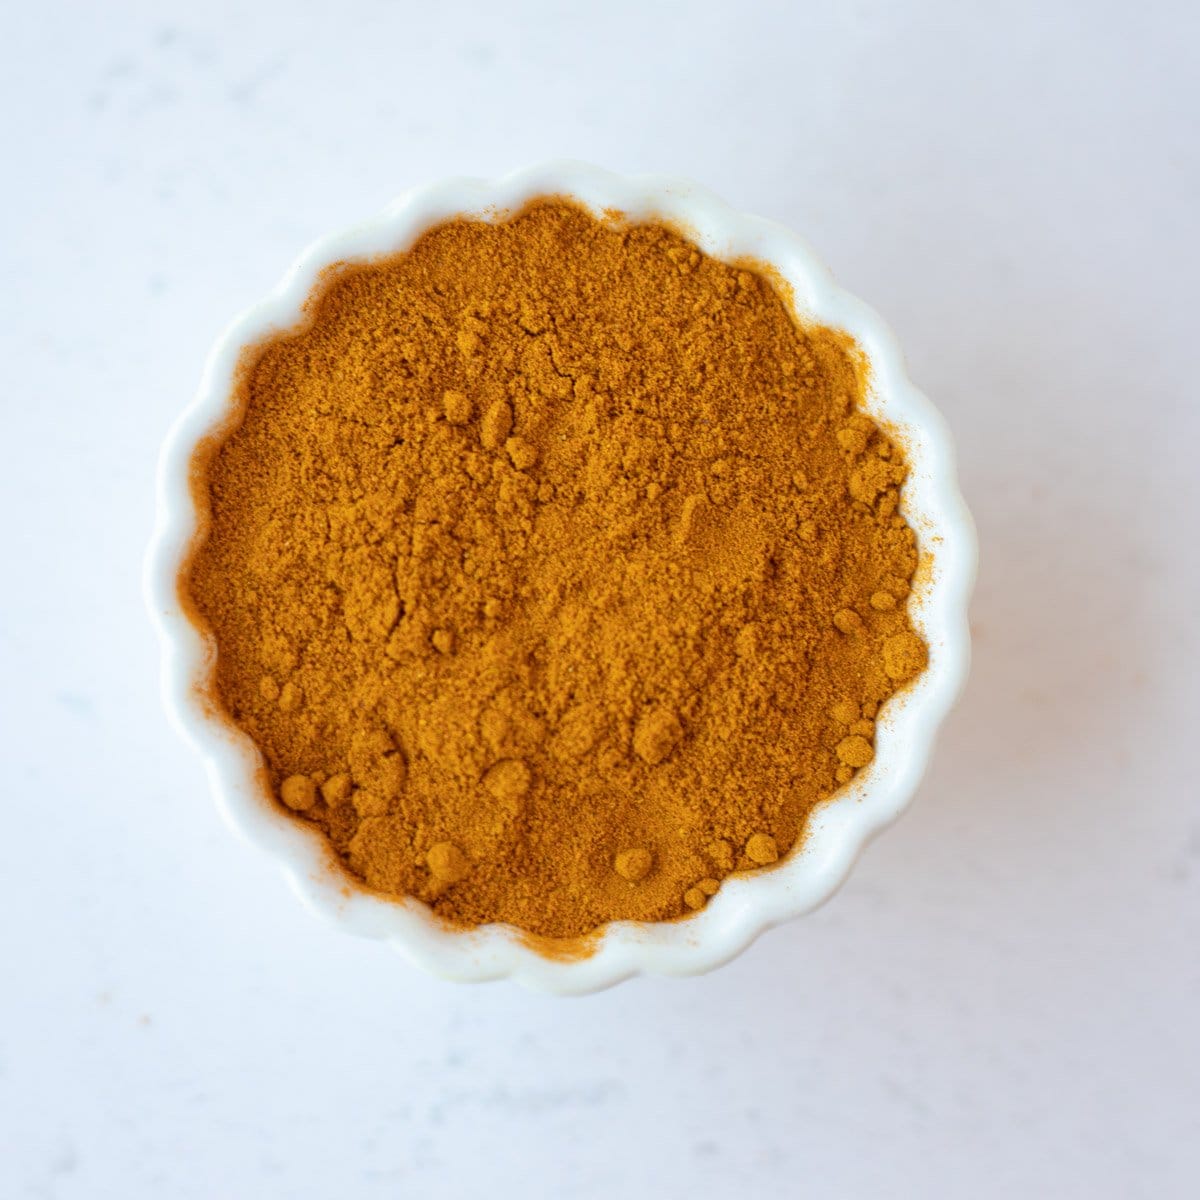 Turmeric powder in a small white bowl.